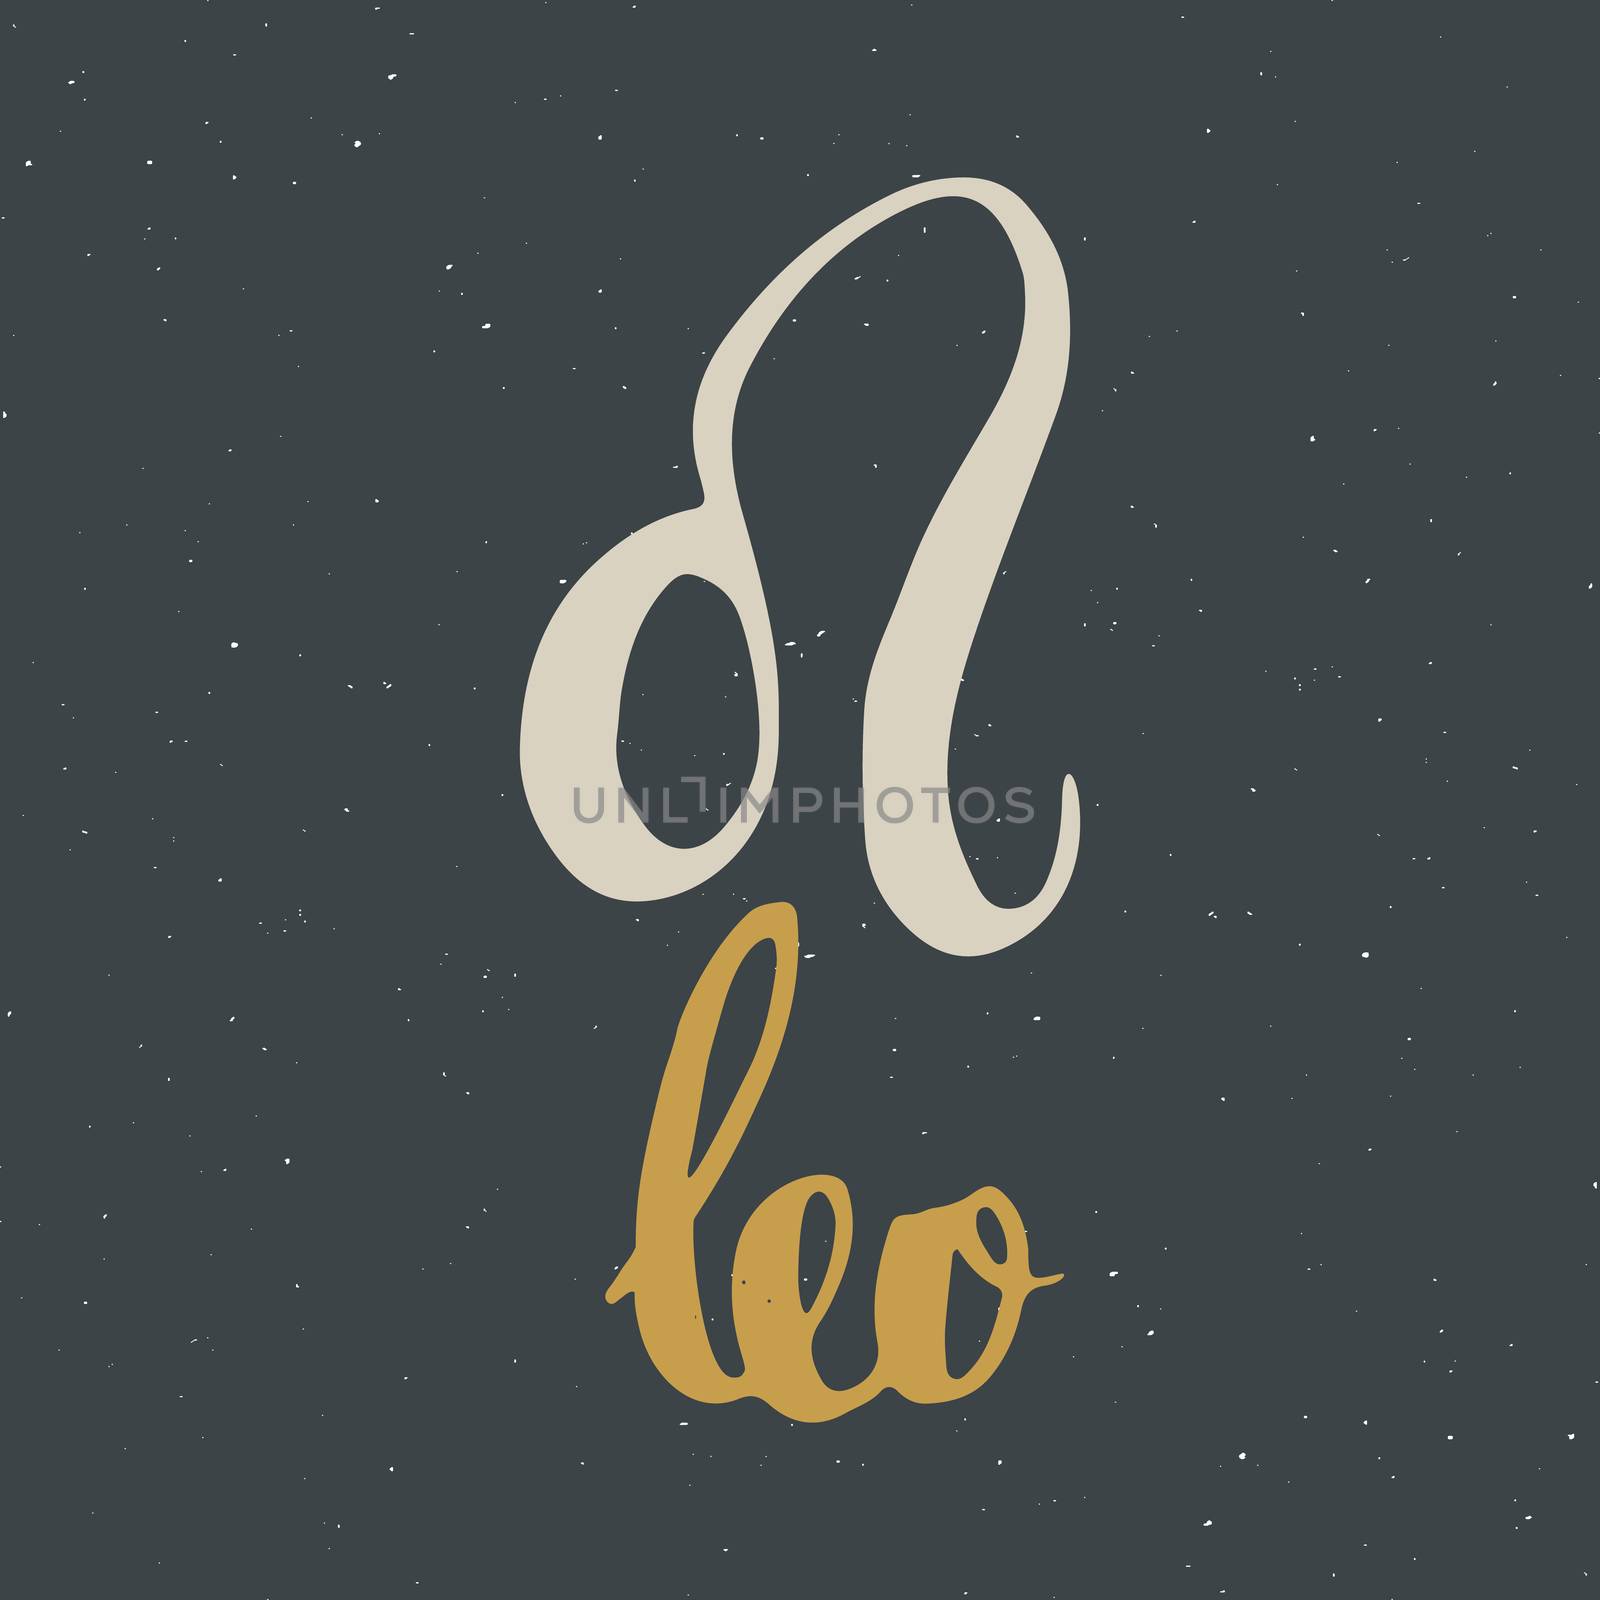 Zodiac sign Leo and lettering. Hand drawn horoscope astrology symbol, grunge textured design, typography print, vector illustration by Lemon_workshop